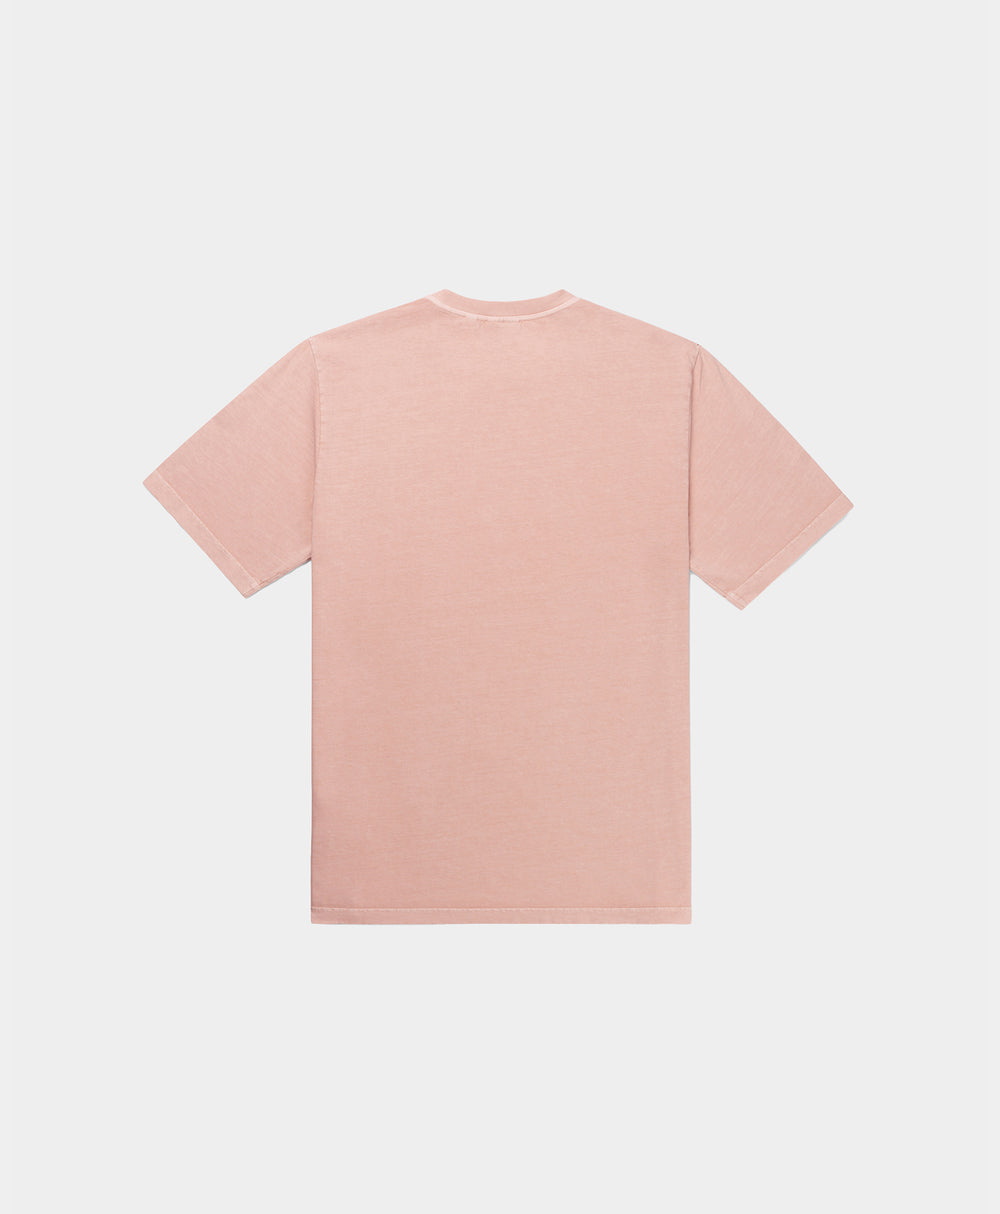 DP - Pink Posom T-Shirt - Packshot - Rear